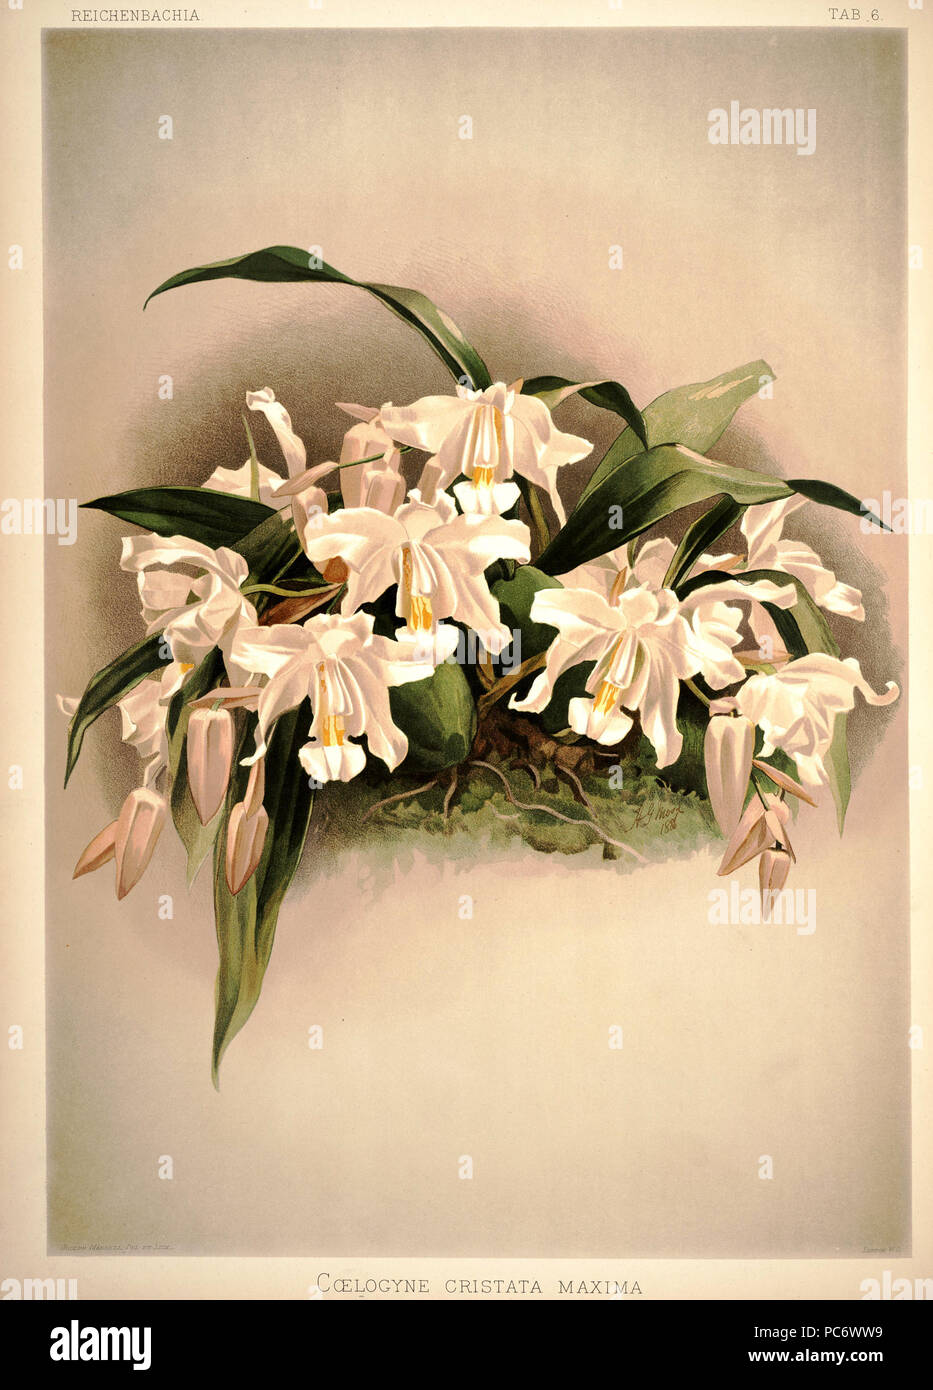 220 Frederick Sander - Reichenbachia I plate 06 (1888) - Coelogyne cristata maxima Stock Photo